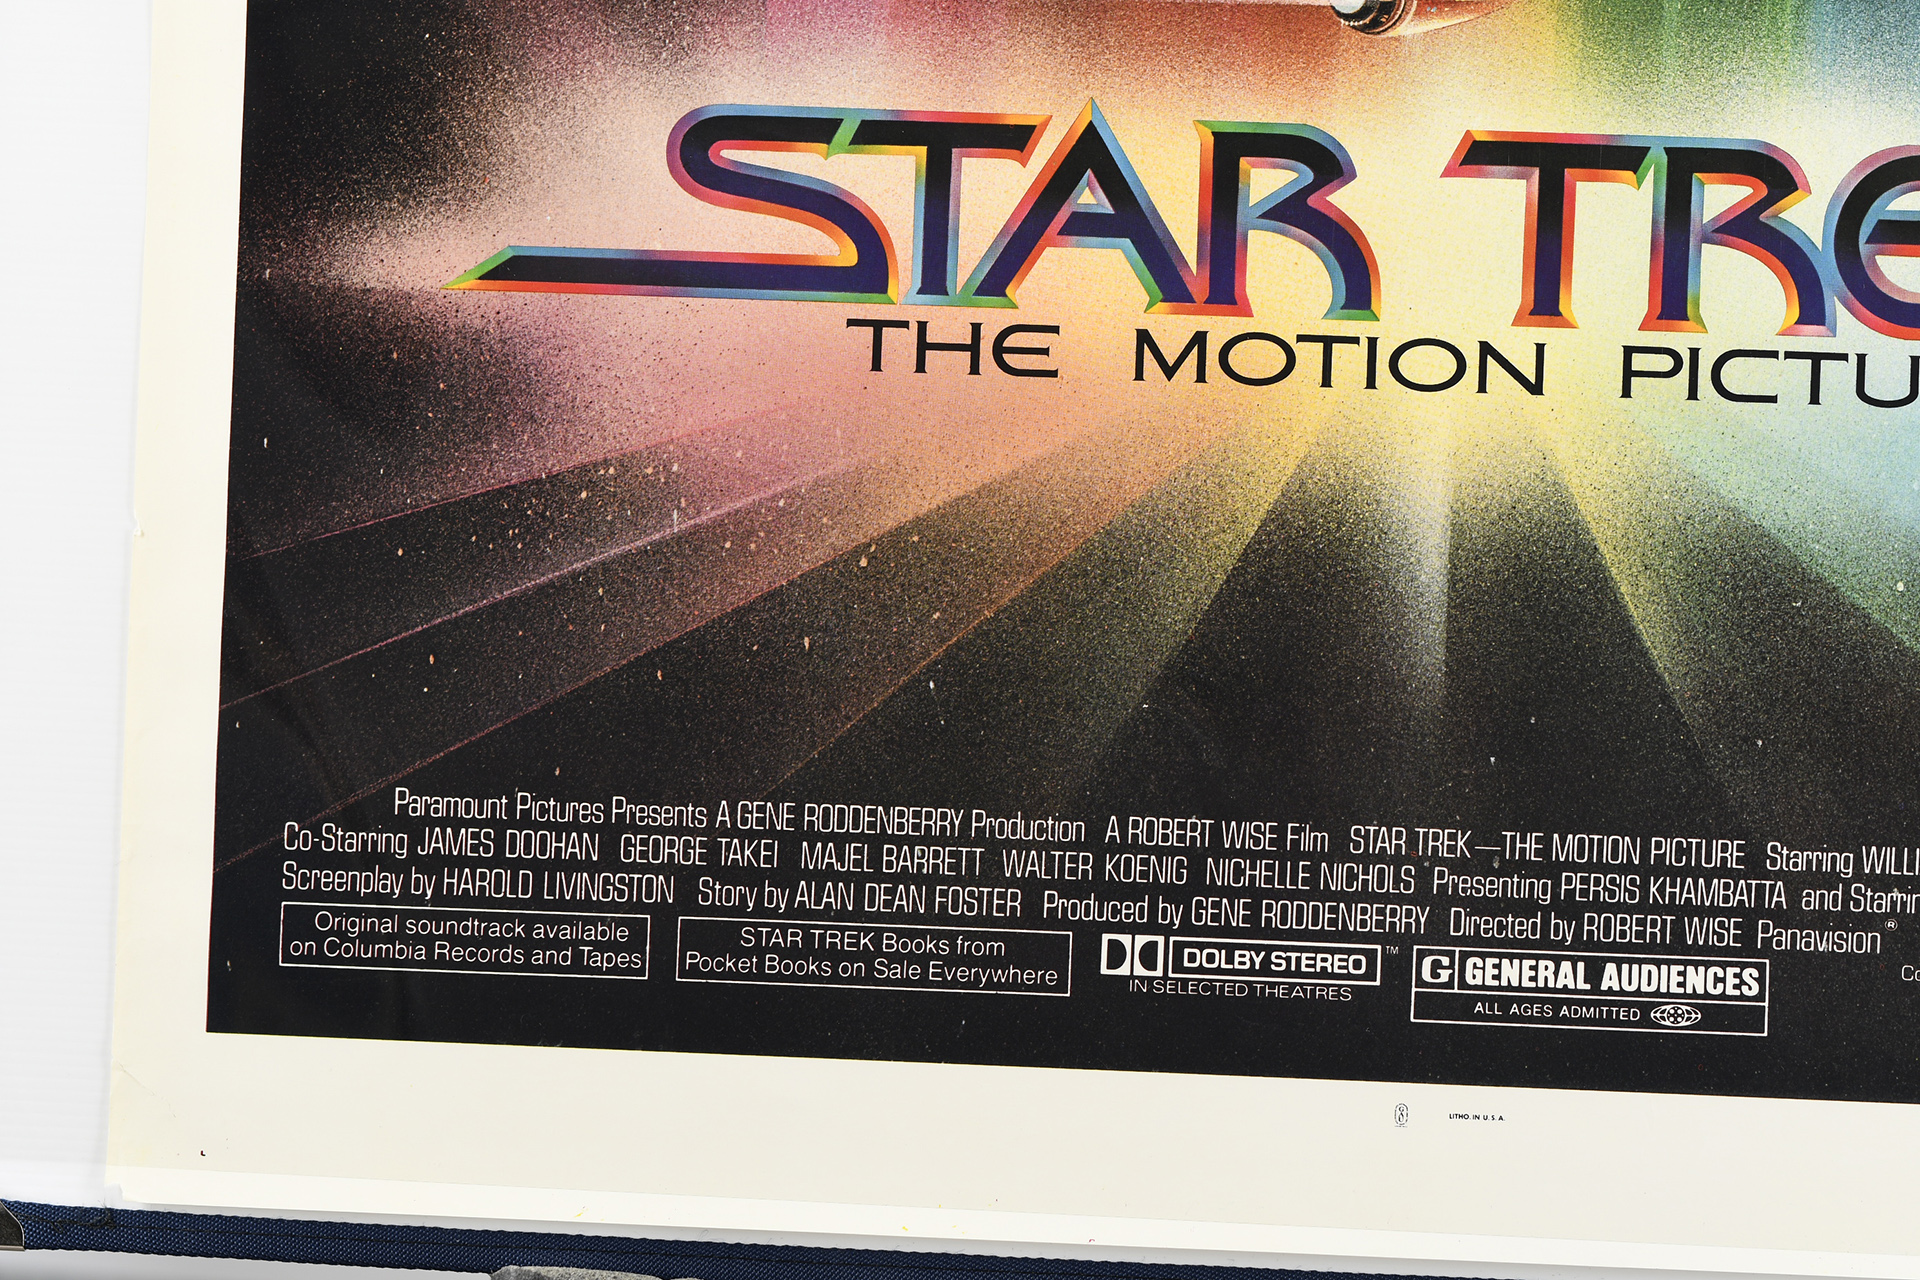 Original Cinema Poster "Star Trek: The Motion Picture"